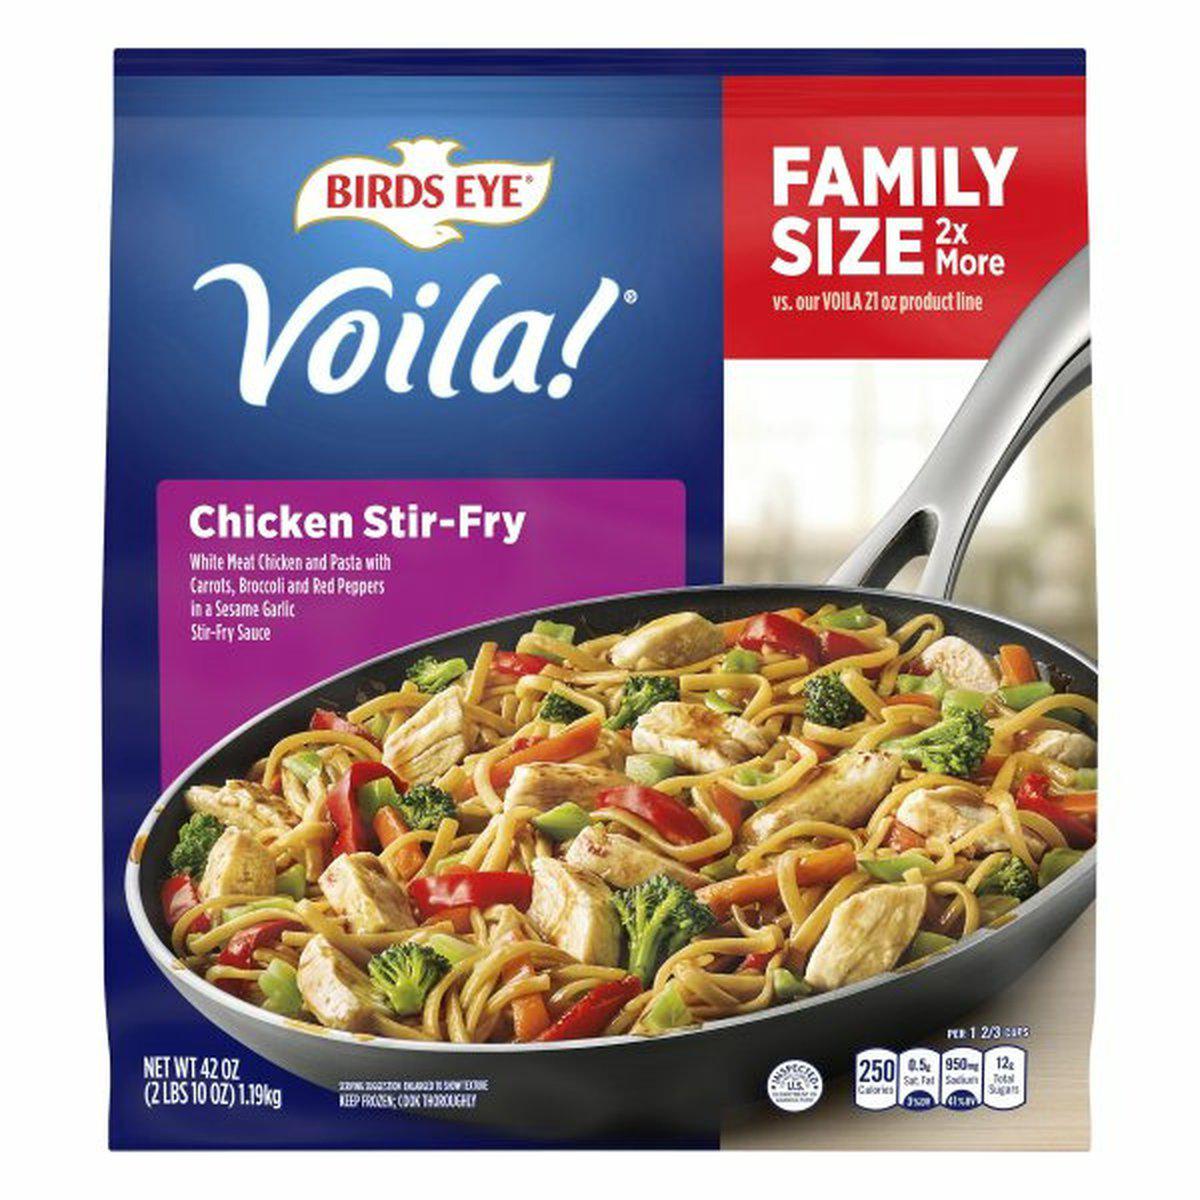 Review - Birds Eye Voila! Voila Chicken Stir Fry, Family Size